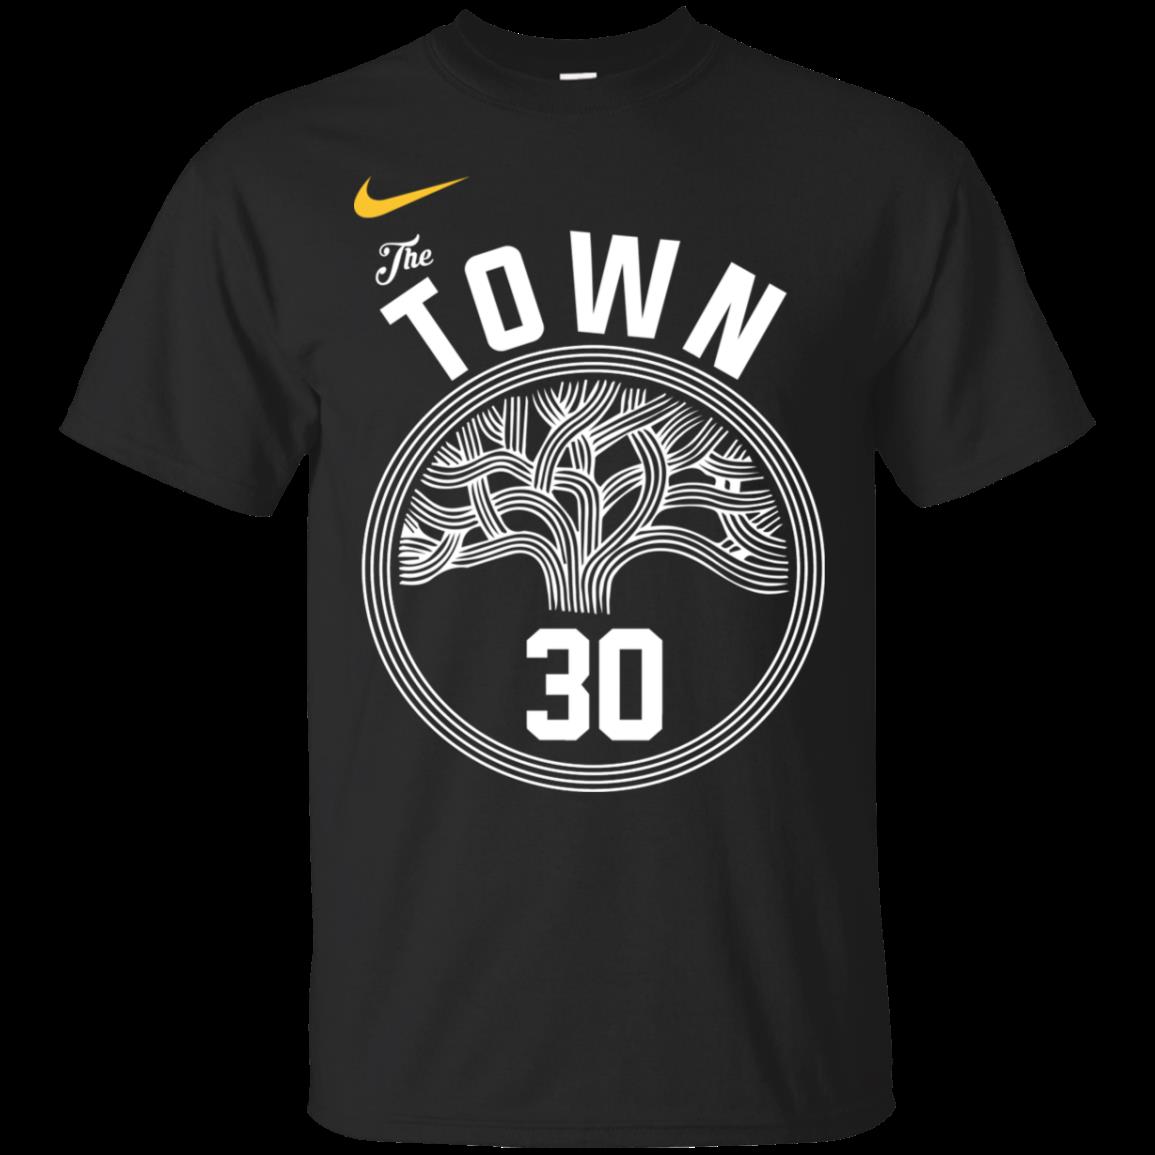 The Town Stephen Curry Funny Logo Nike Shirt Cotton Shirt